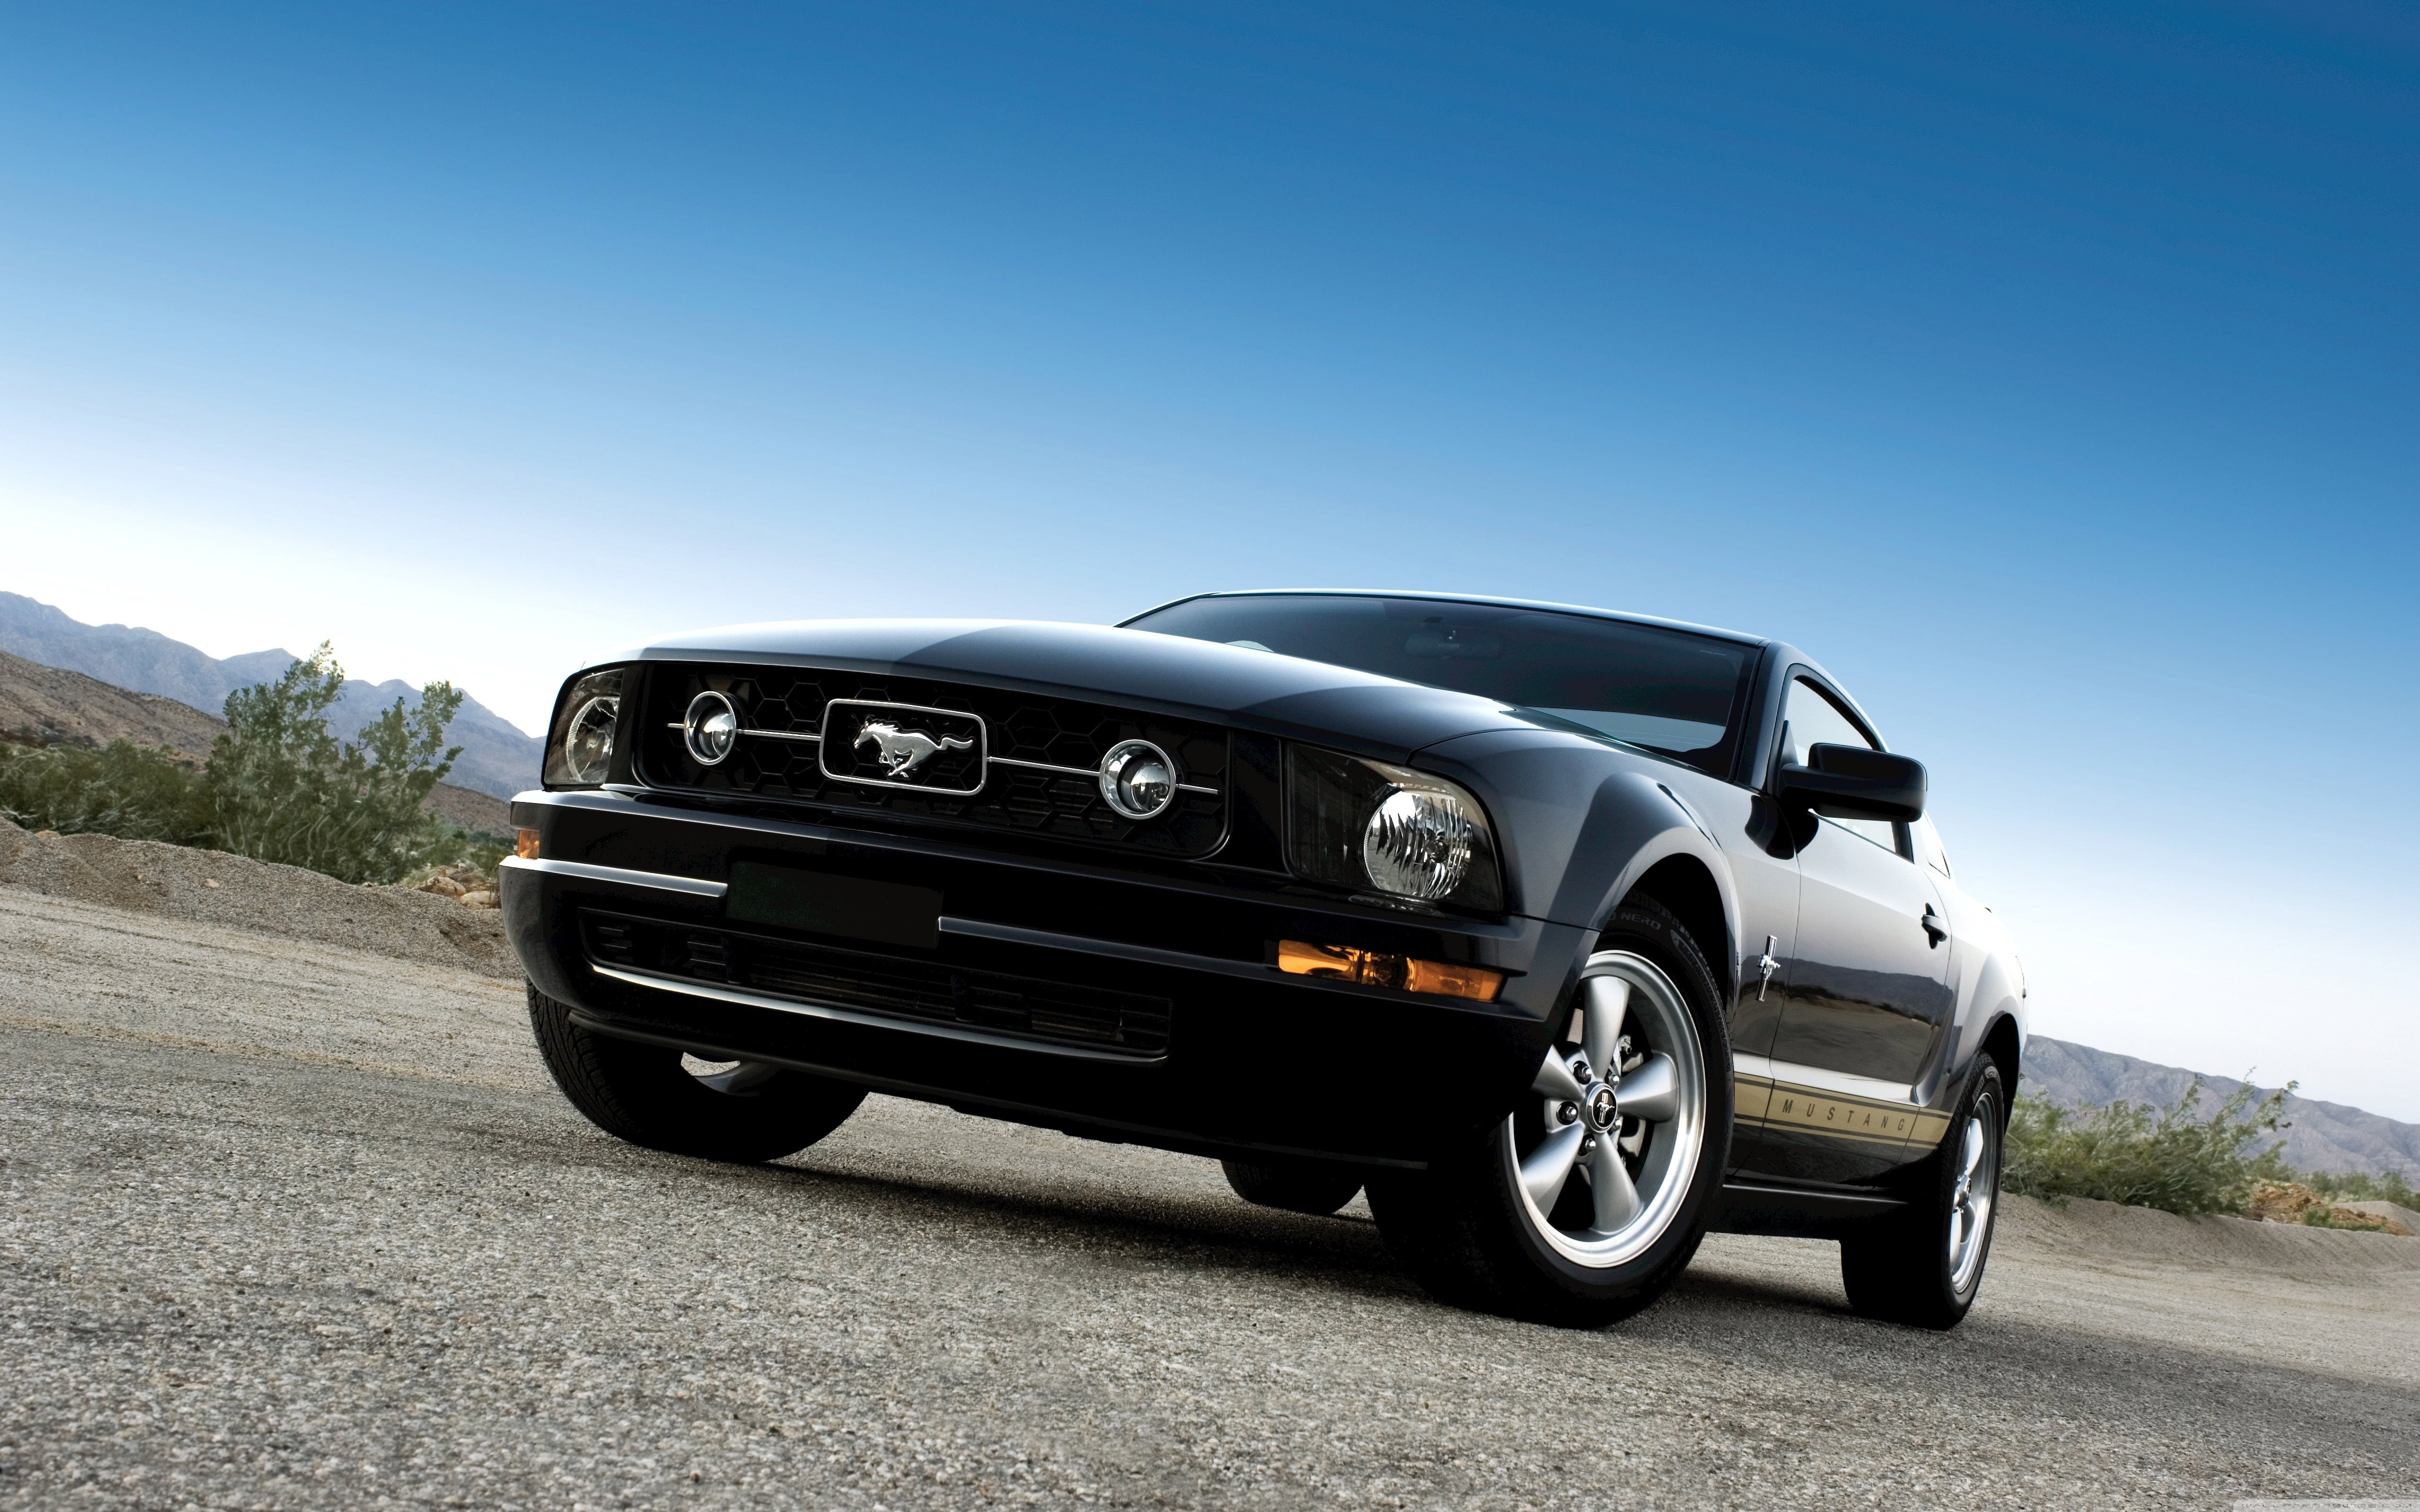 Ford Mustang 2008 Black - HD Wallpaper 